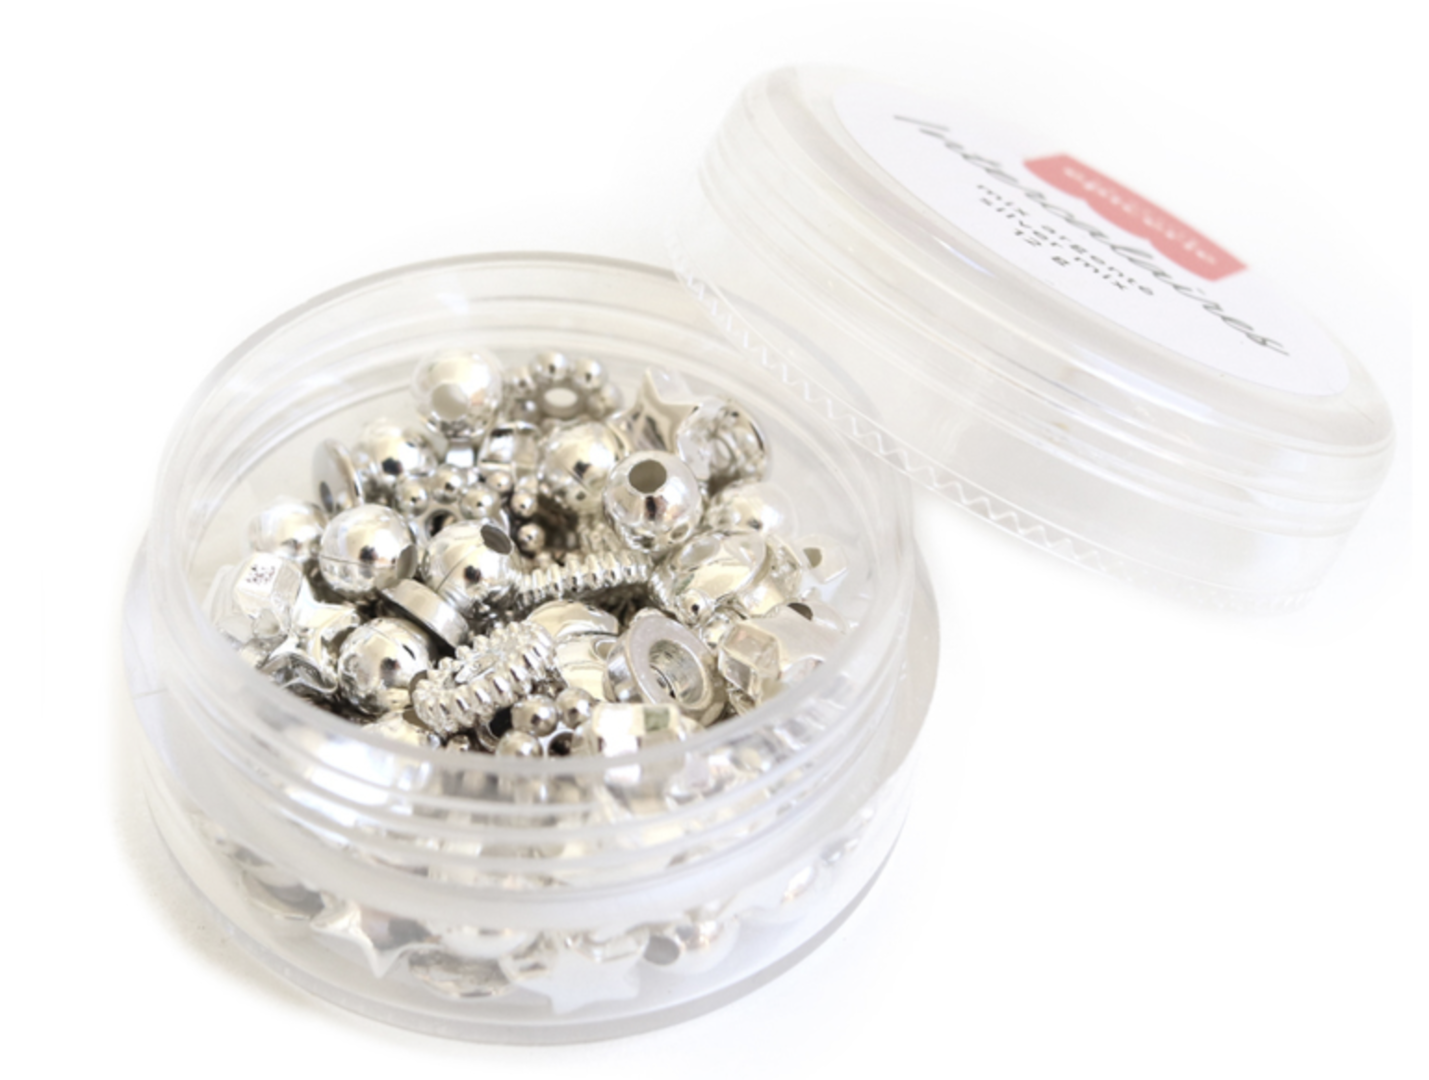 mix-de-perles-intercalaires-rondelles-heishi-argent-12-g-2